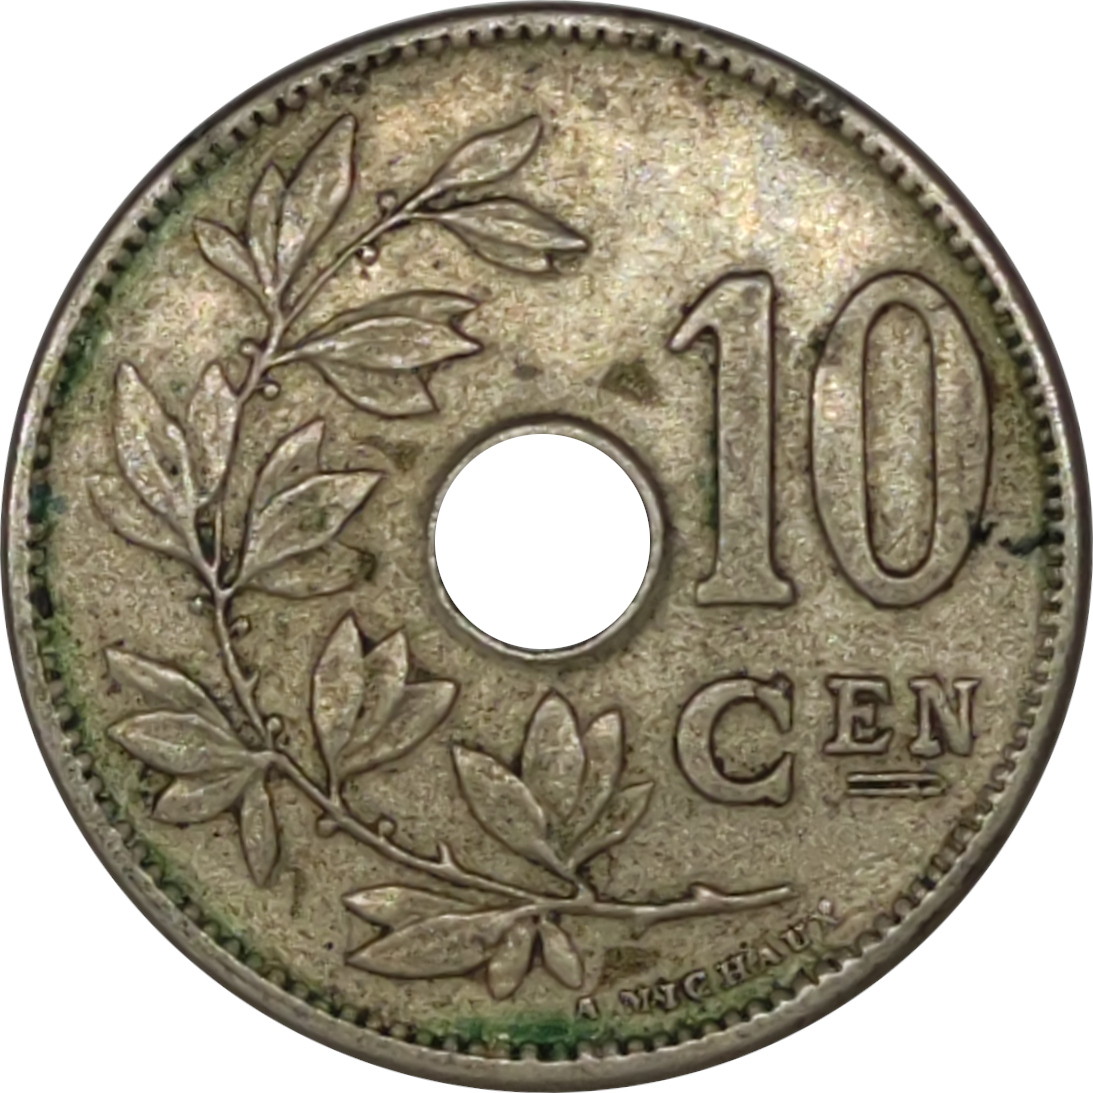 10 centimes - Leopold II - Michaux